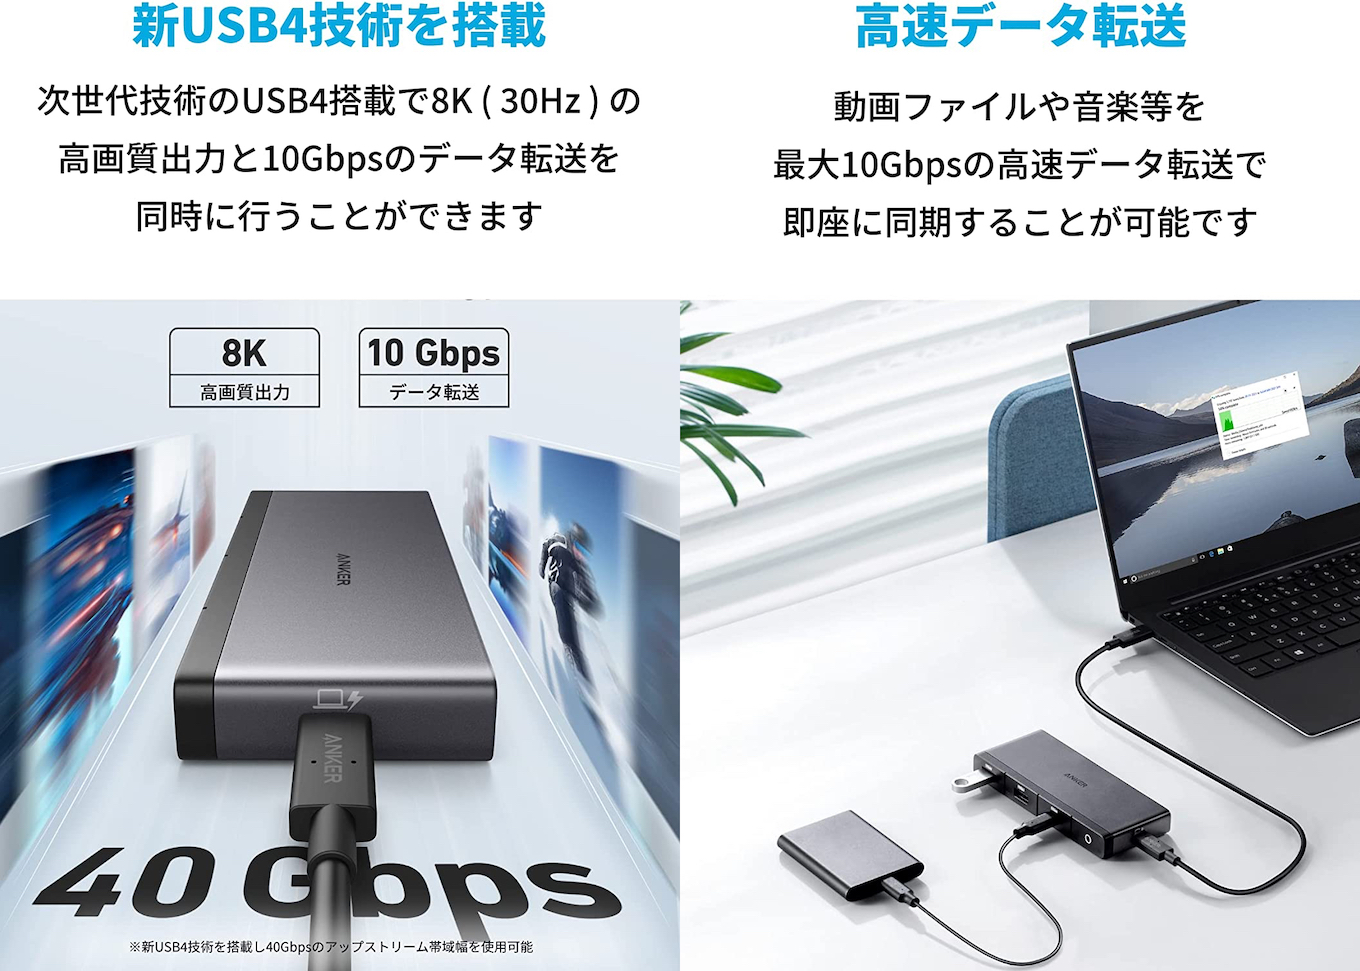 Anker 556 USB-C ハブ (8-in-1, USB4)